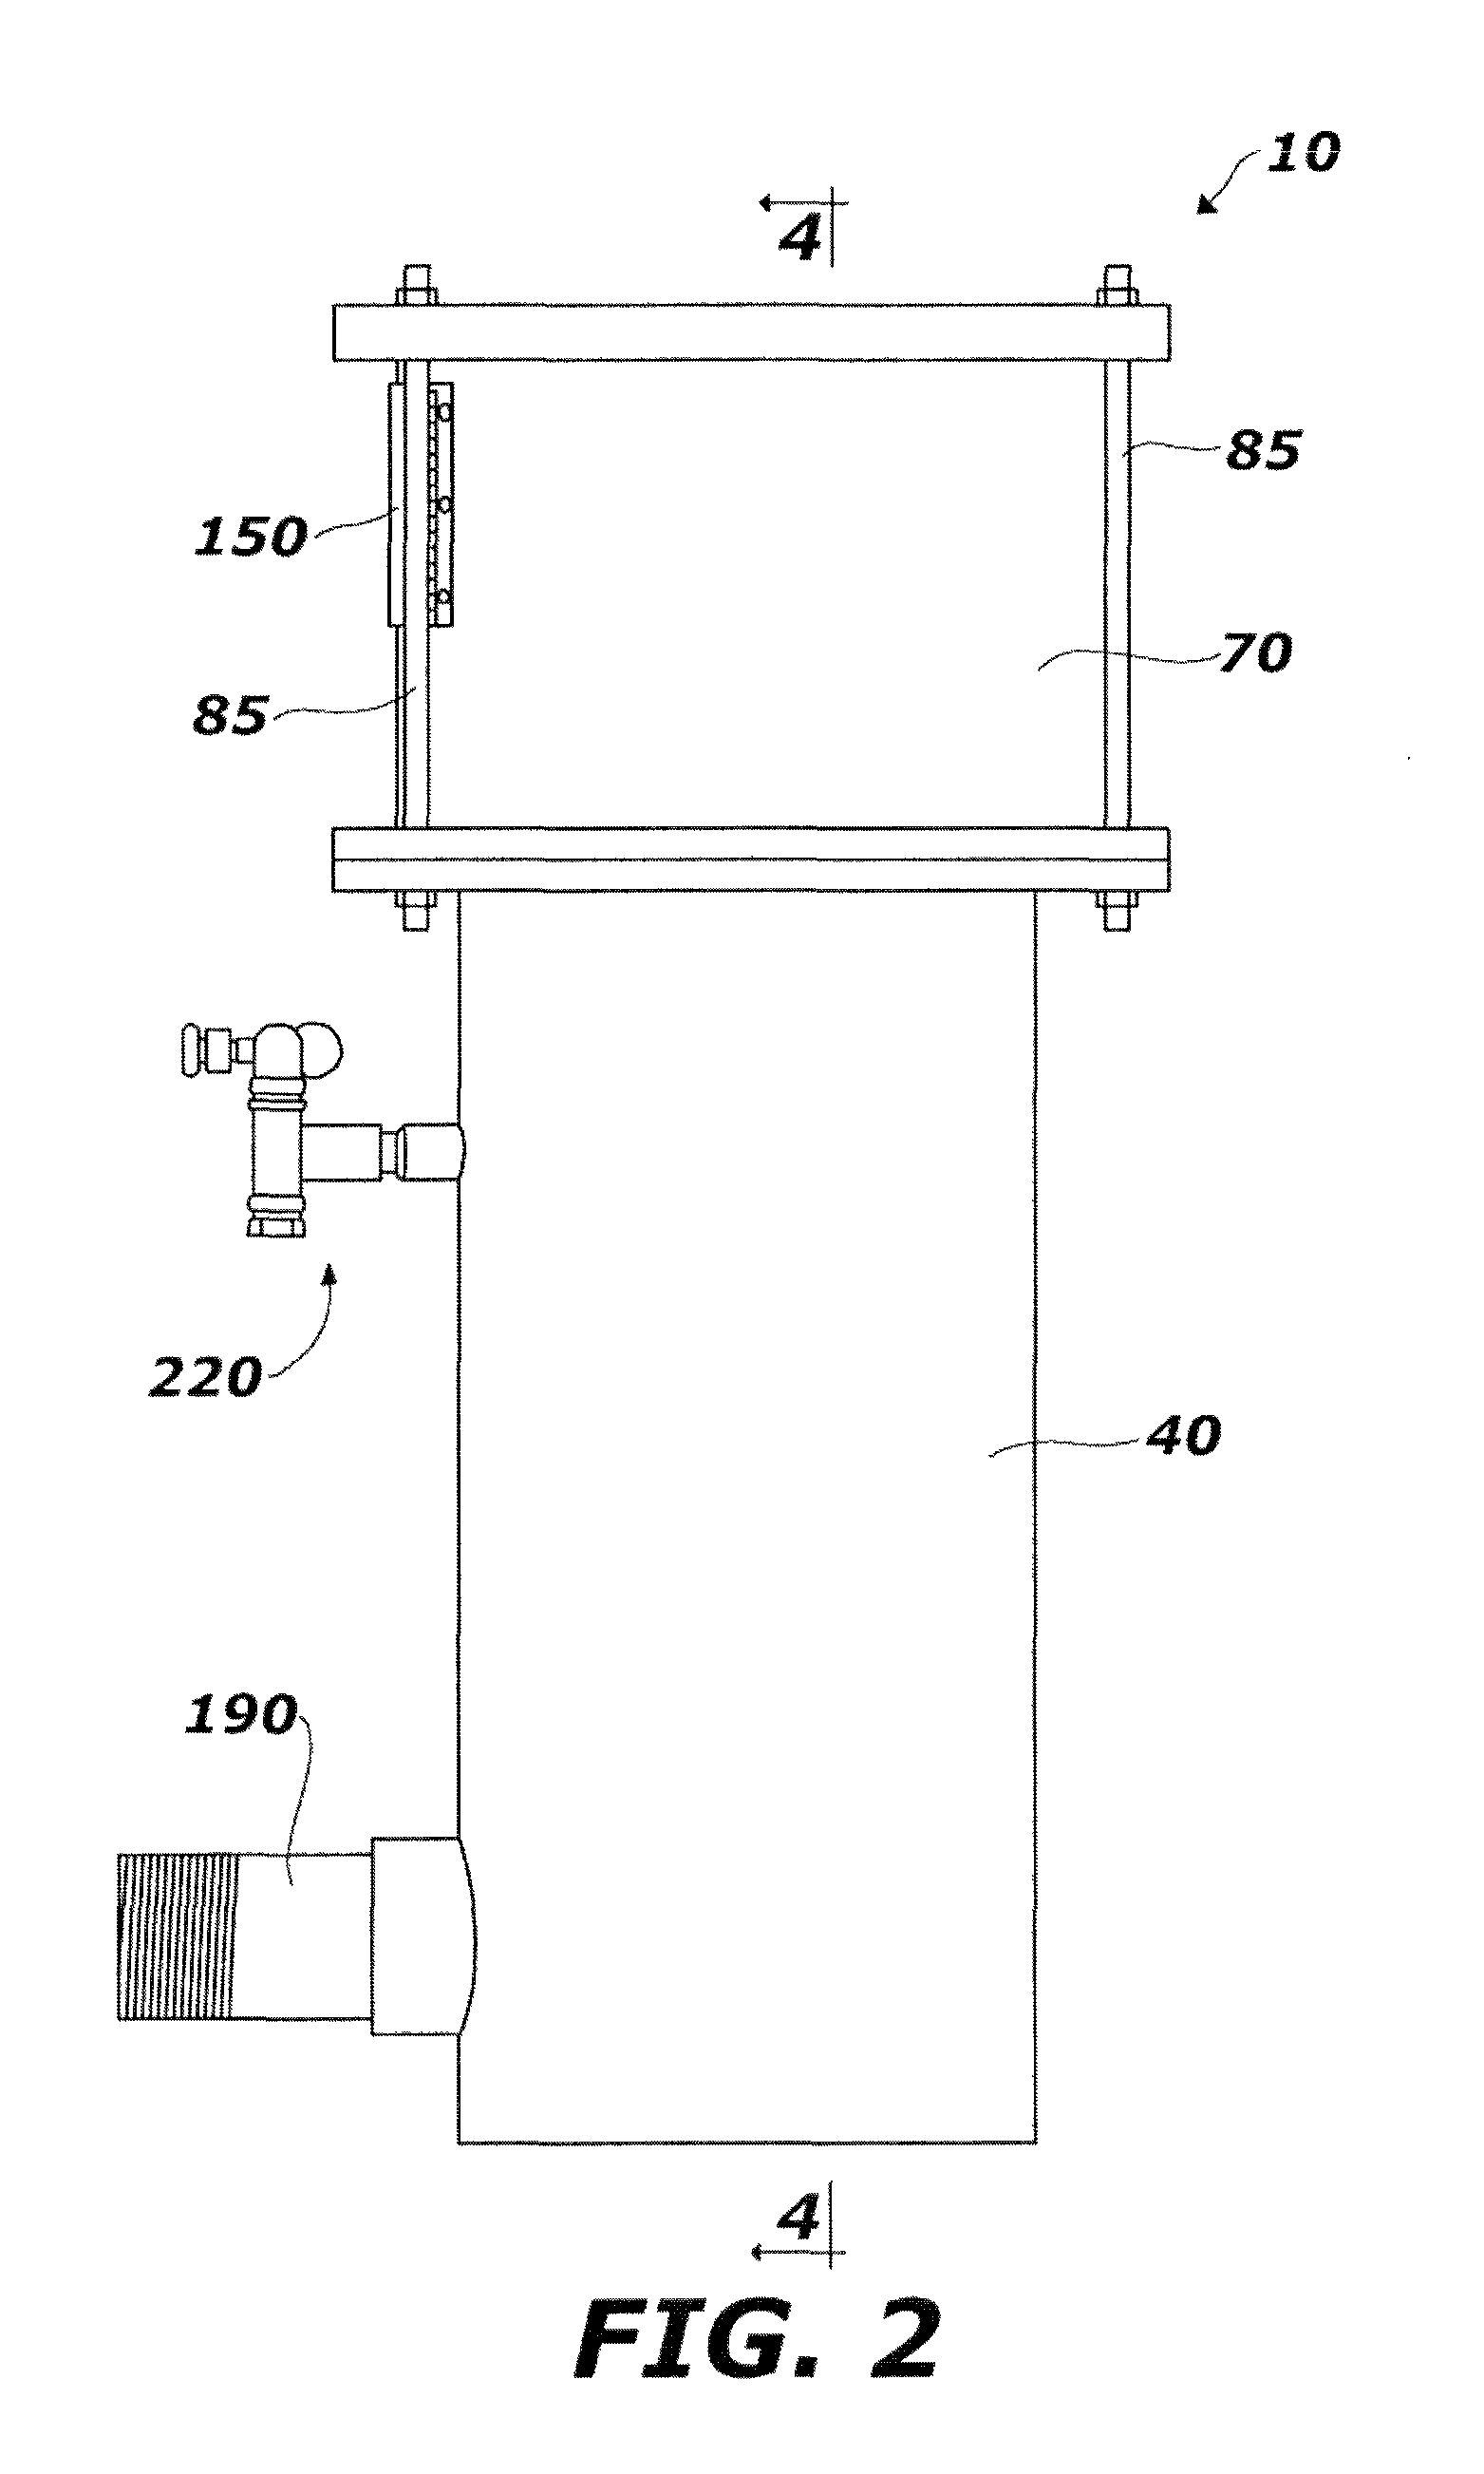 Riser assembly for use with fluid sprinkler